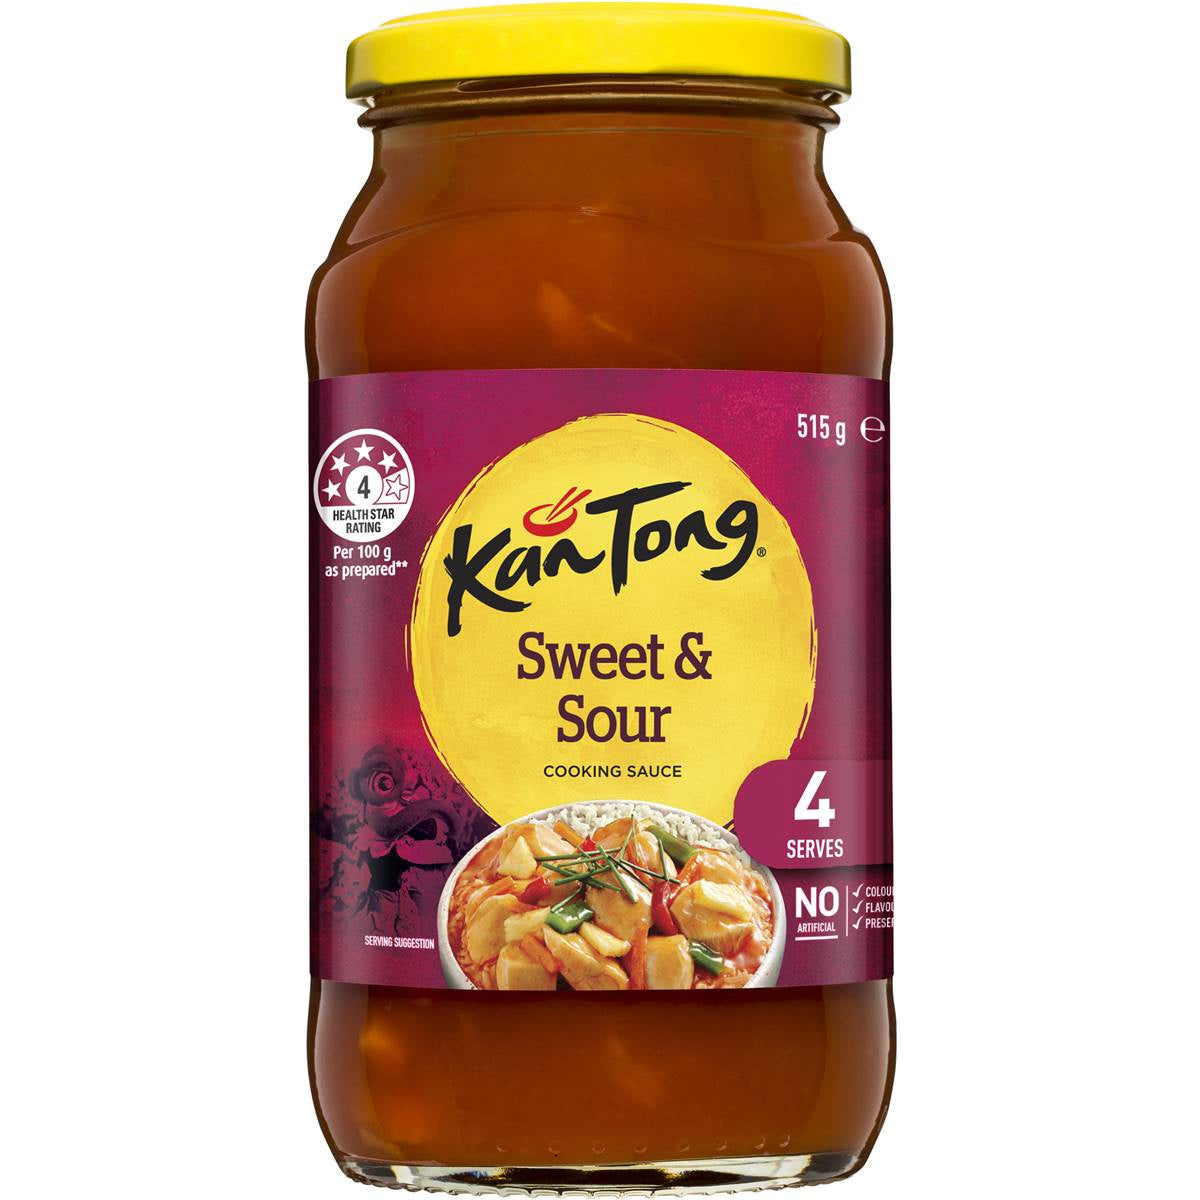 Kantong Cooking Sauce Sweet & Sour 515G